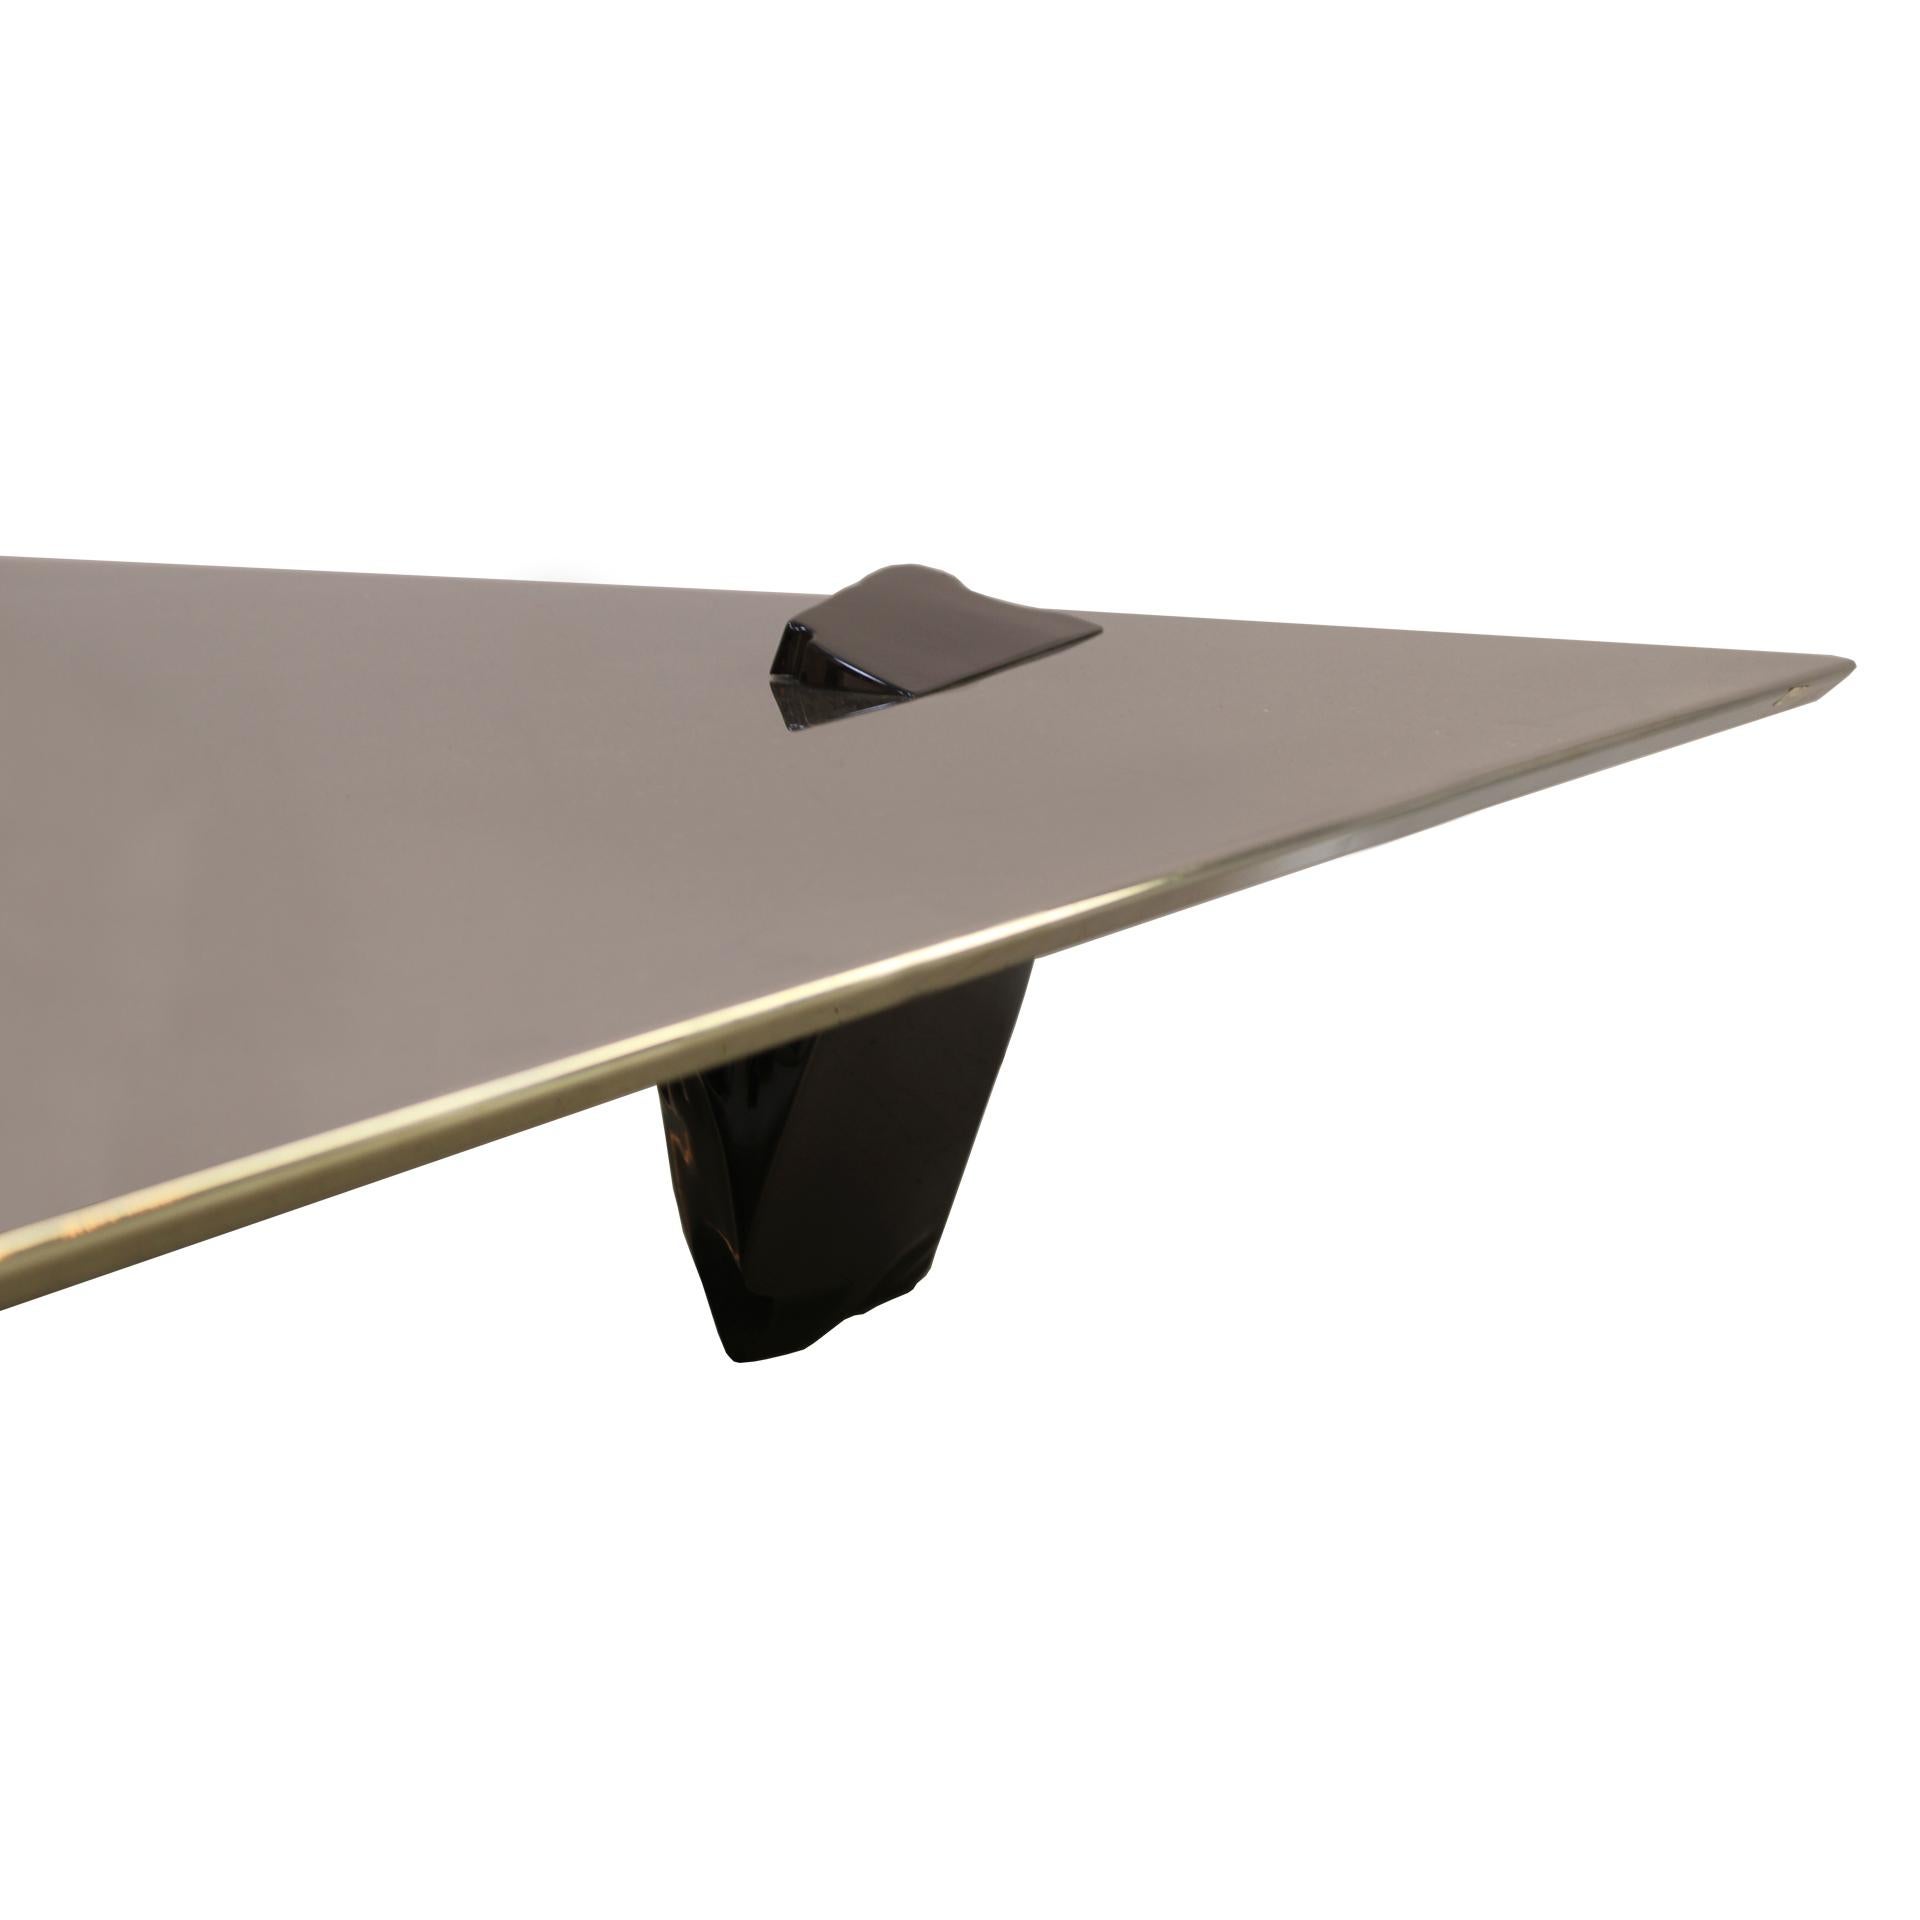 Aluminum Contemporary Mod Sereno Coffee Table Designed by Fredrikson Stallard, Italy